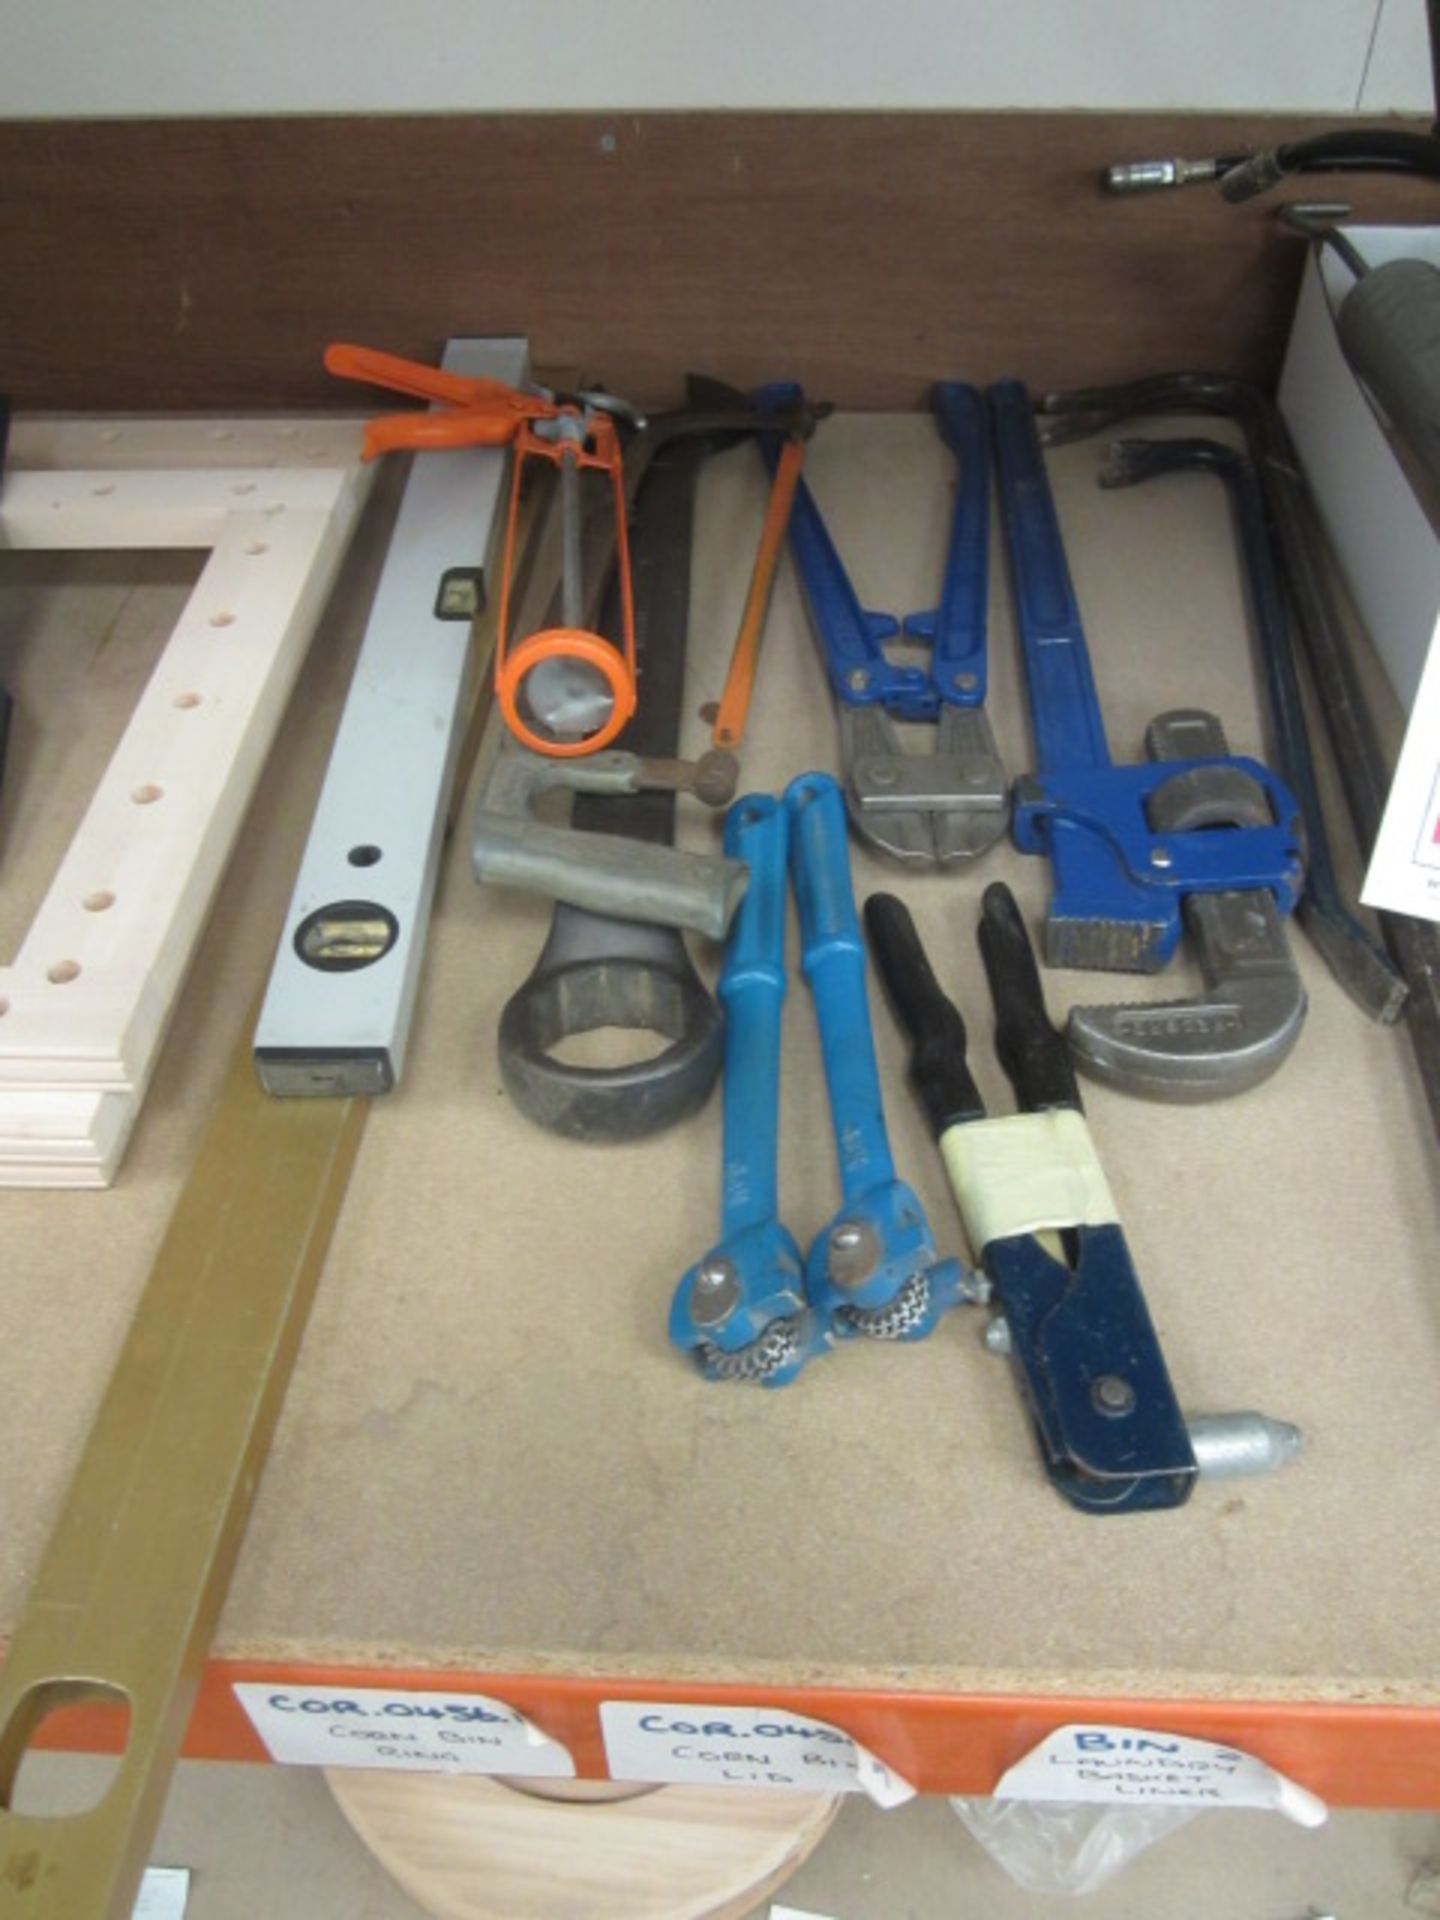 Quantity of assorted hand tools including allen keys, screwdrivers, socket sets, solder iron,